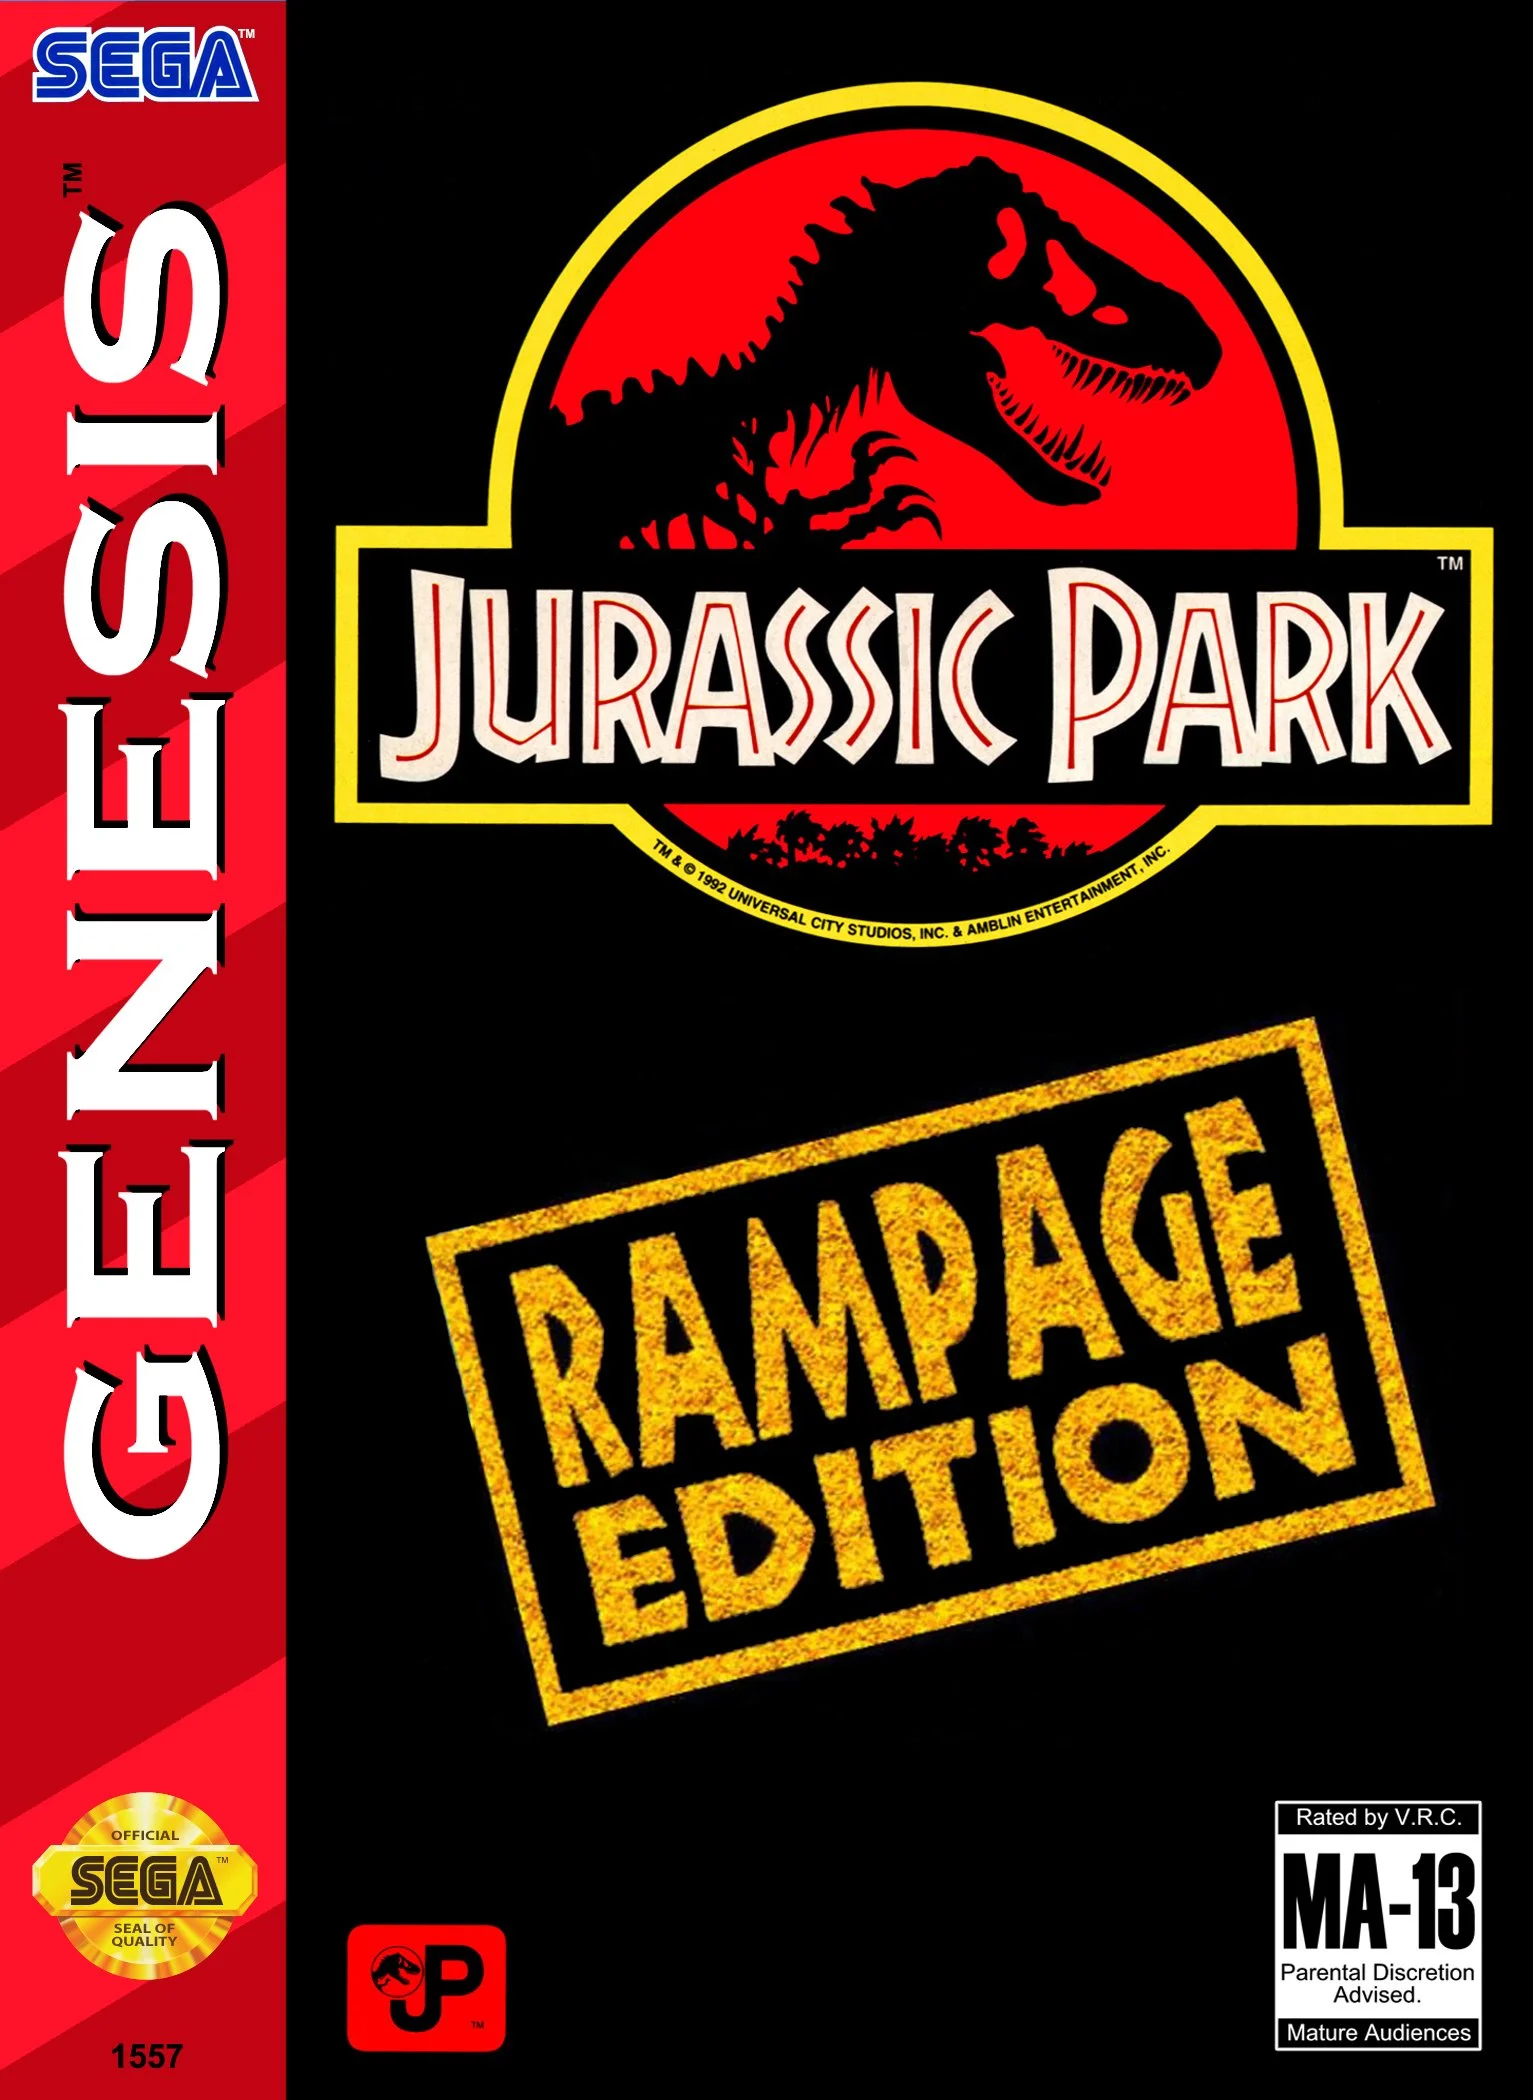 Jurassic Park: Rampage Edition